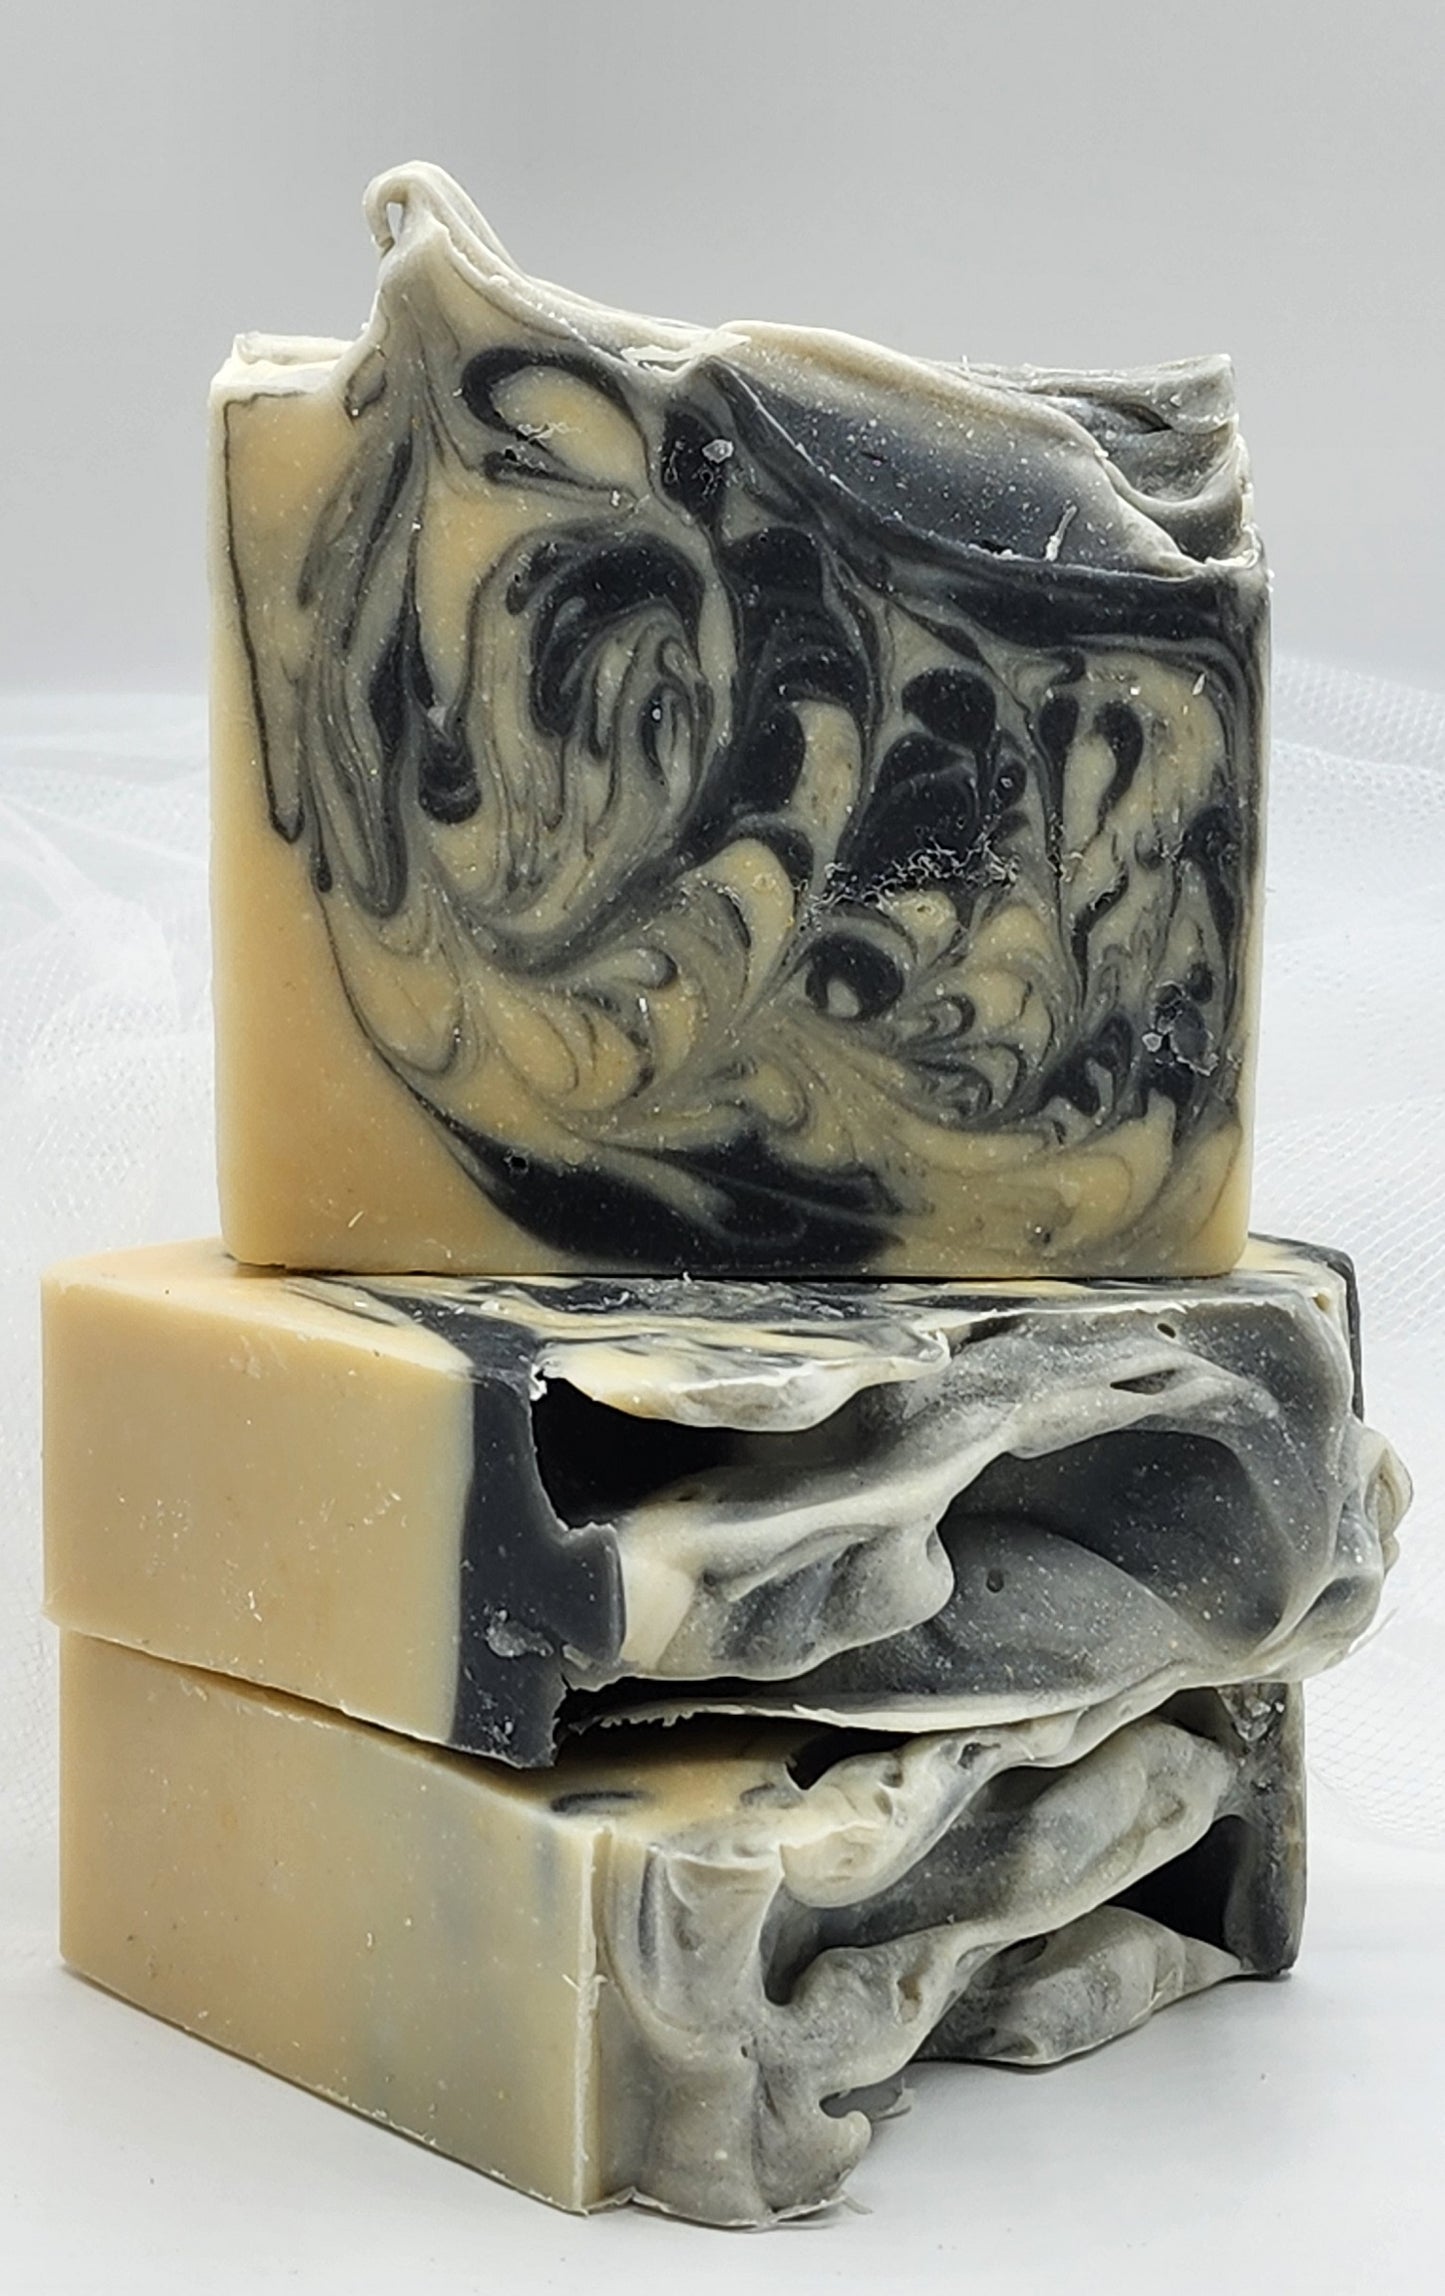 MR. DARCY ARTISAN Soap / MEN'S  Bar Soap /  Goat's Milk Soap / Honey / Yogurt / Colloidal Oatmeal, Gift Soap / Gift Idea / Handmade Soap / Cold Process Soap